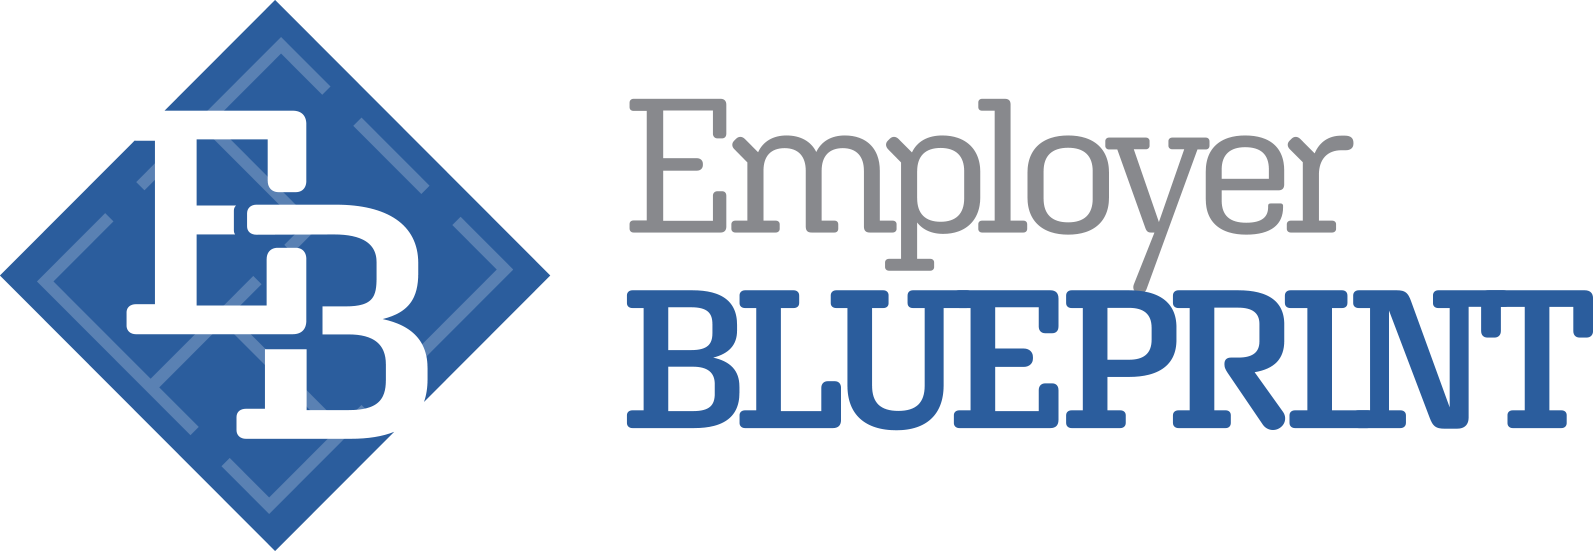 Employer_Blueprint_WIDE_MAIN_COLOR_LOGO.png